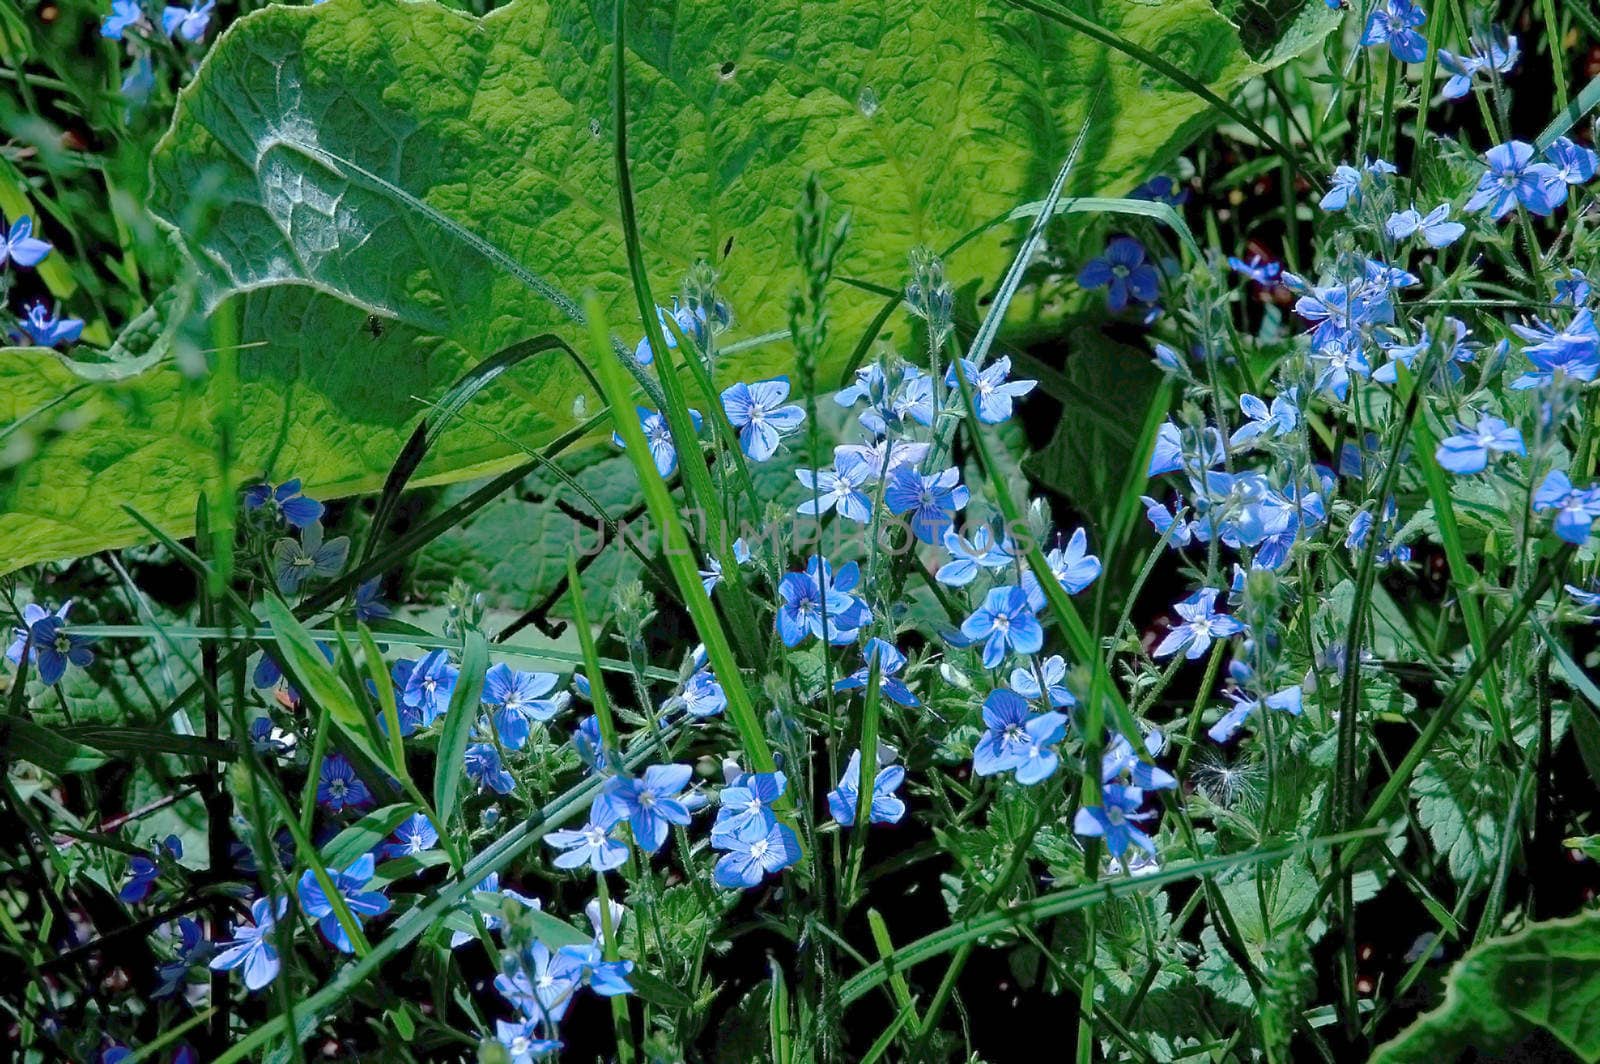 Little beautiful blue flowers in green grass.